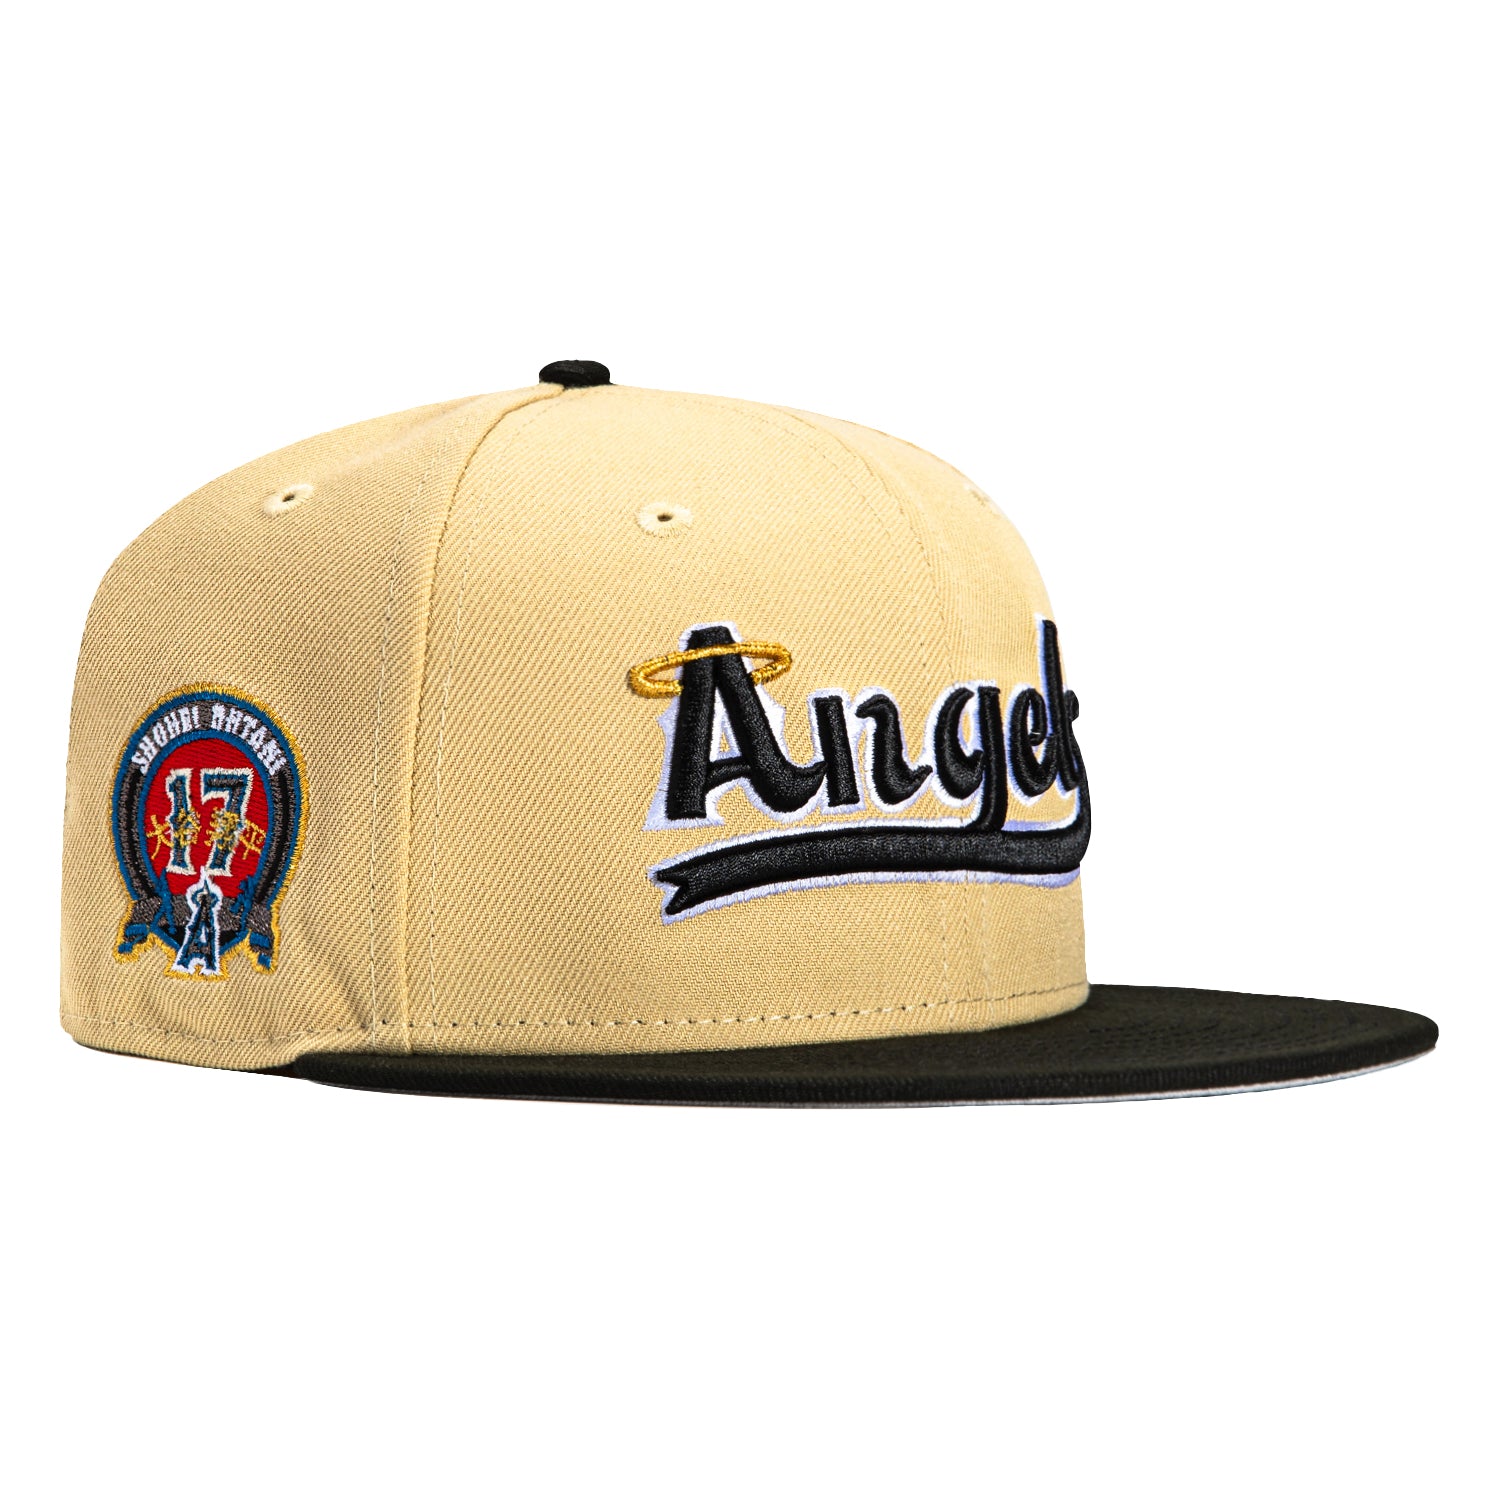 Los Angeles Angels '47 City Connect MVP Adjustable Hat - Cream